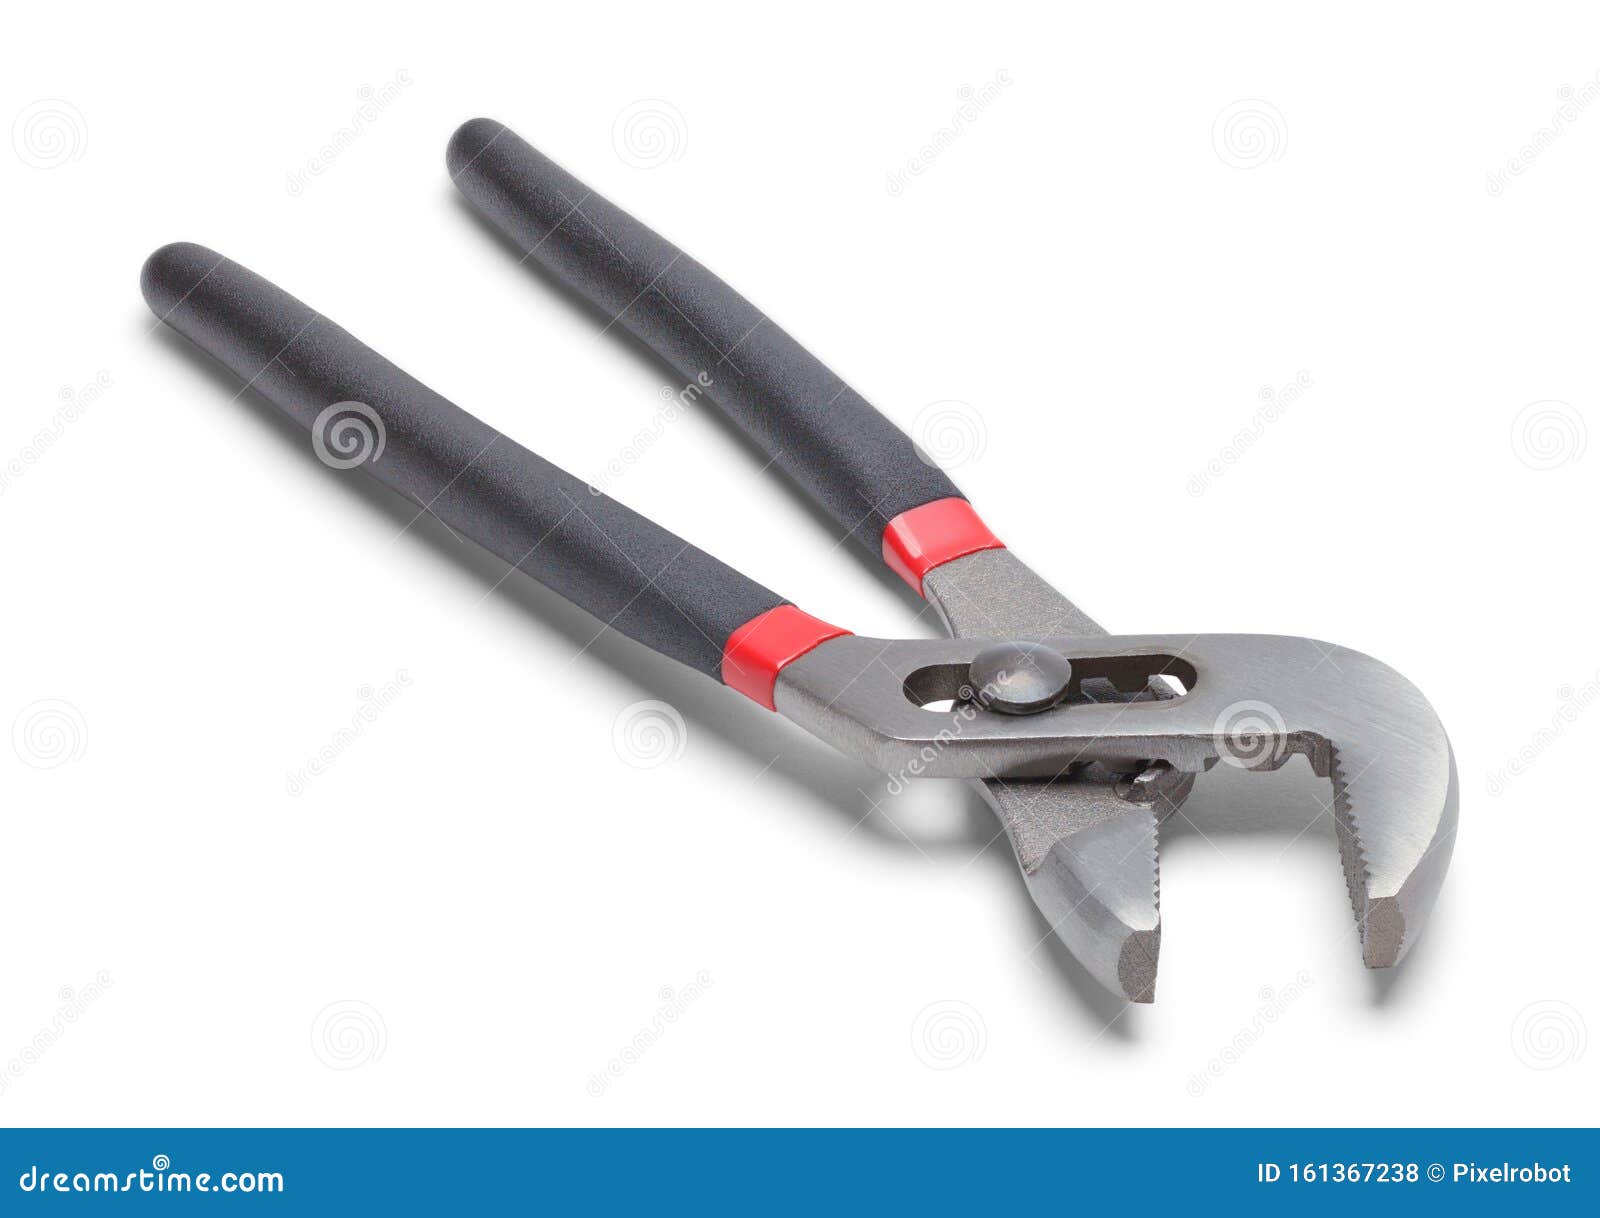 Adjustable Plyers stock photo. Image of cutting, carpenter - 161367238